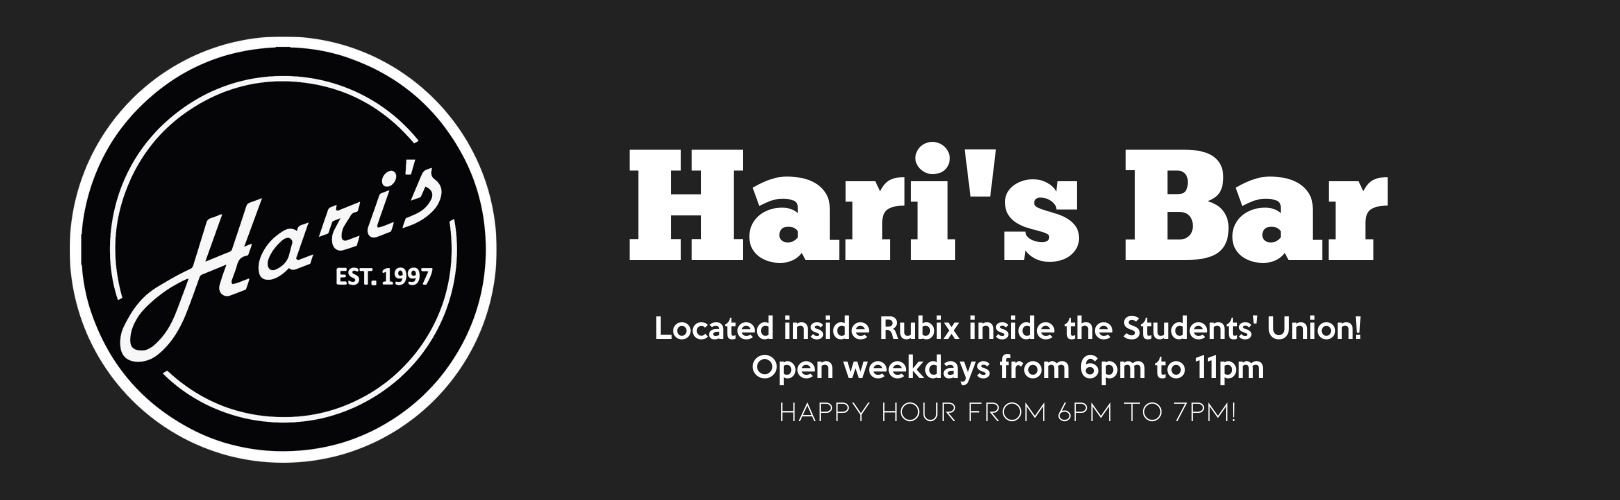 Hari's Bar header (1).jpg